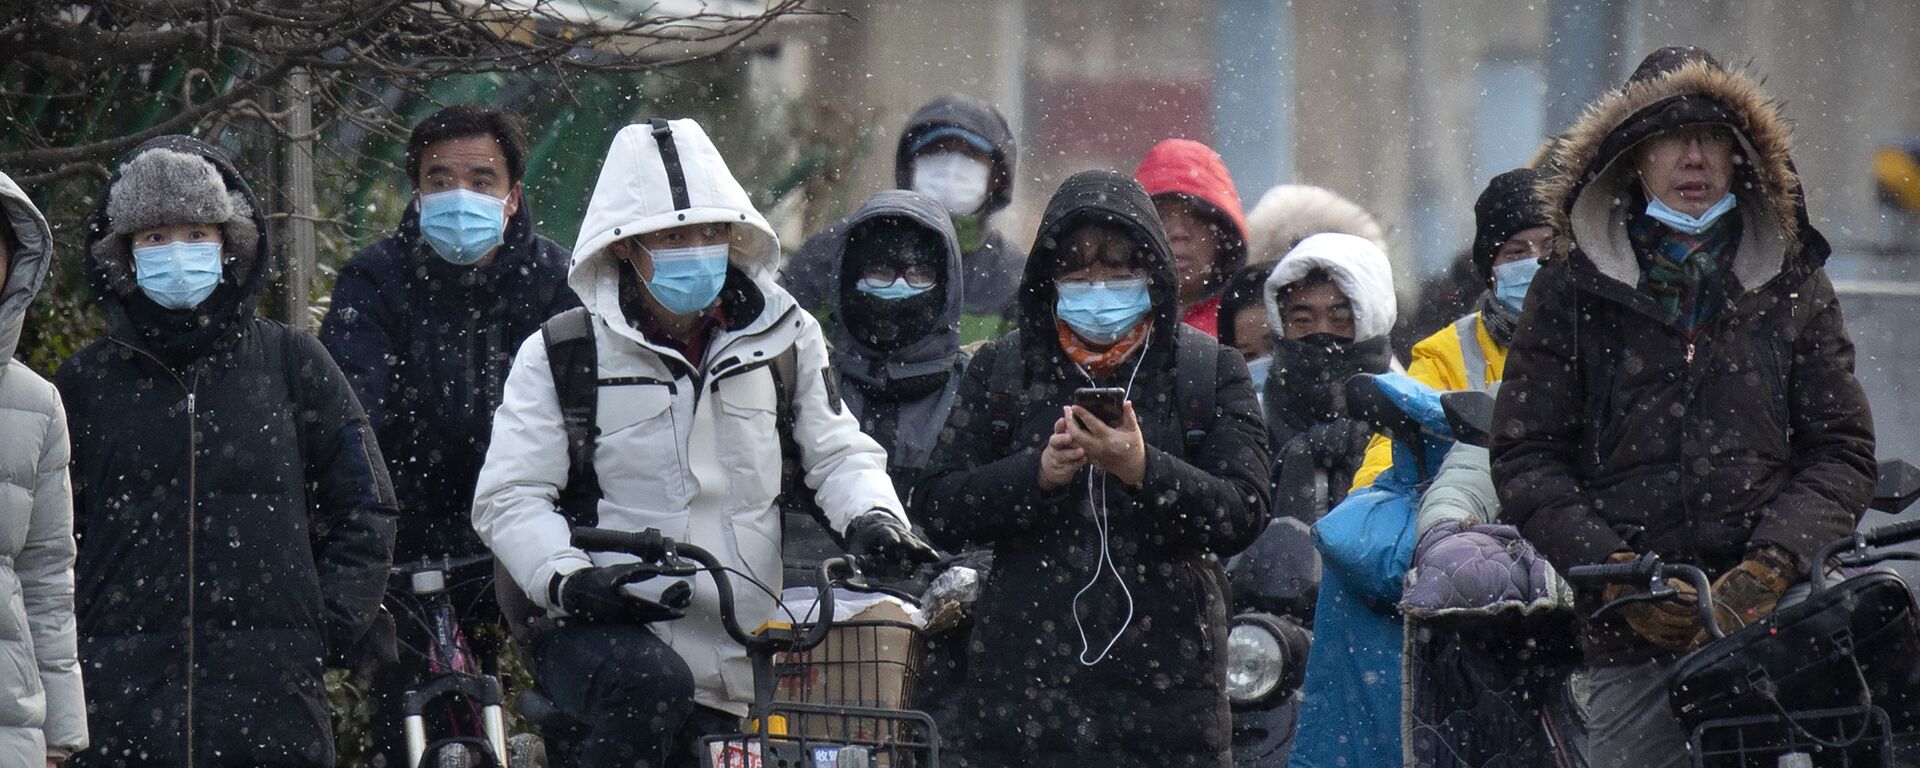 Пандемия коронавируса COVID 19 - люди в маска в Пекине, Китай - Sputnik Грузия, 1920, 25.02.2021